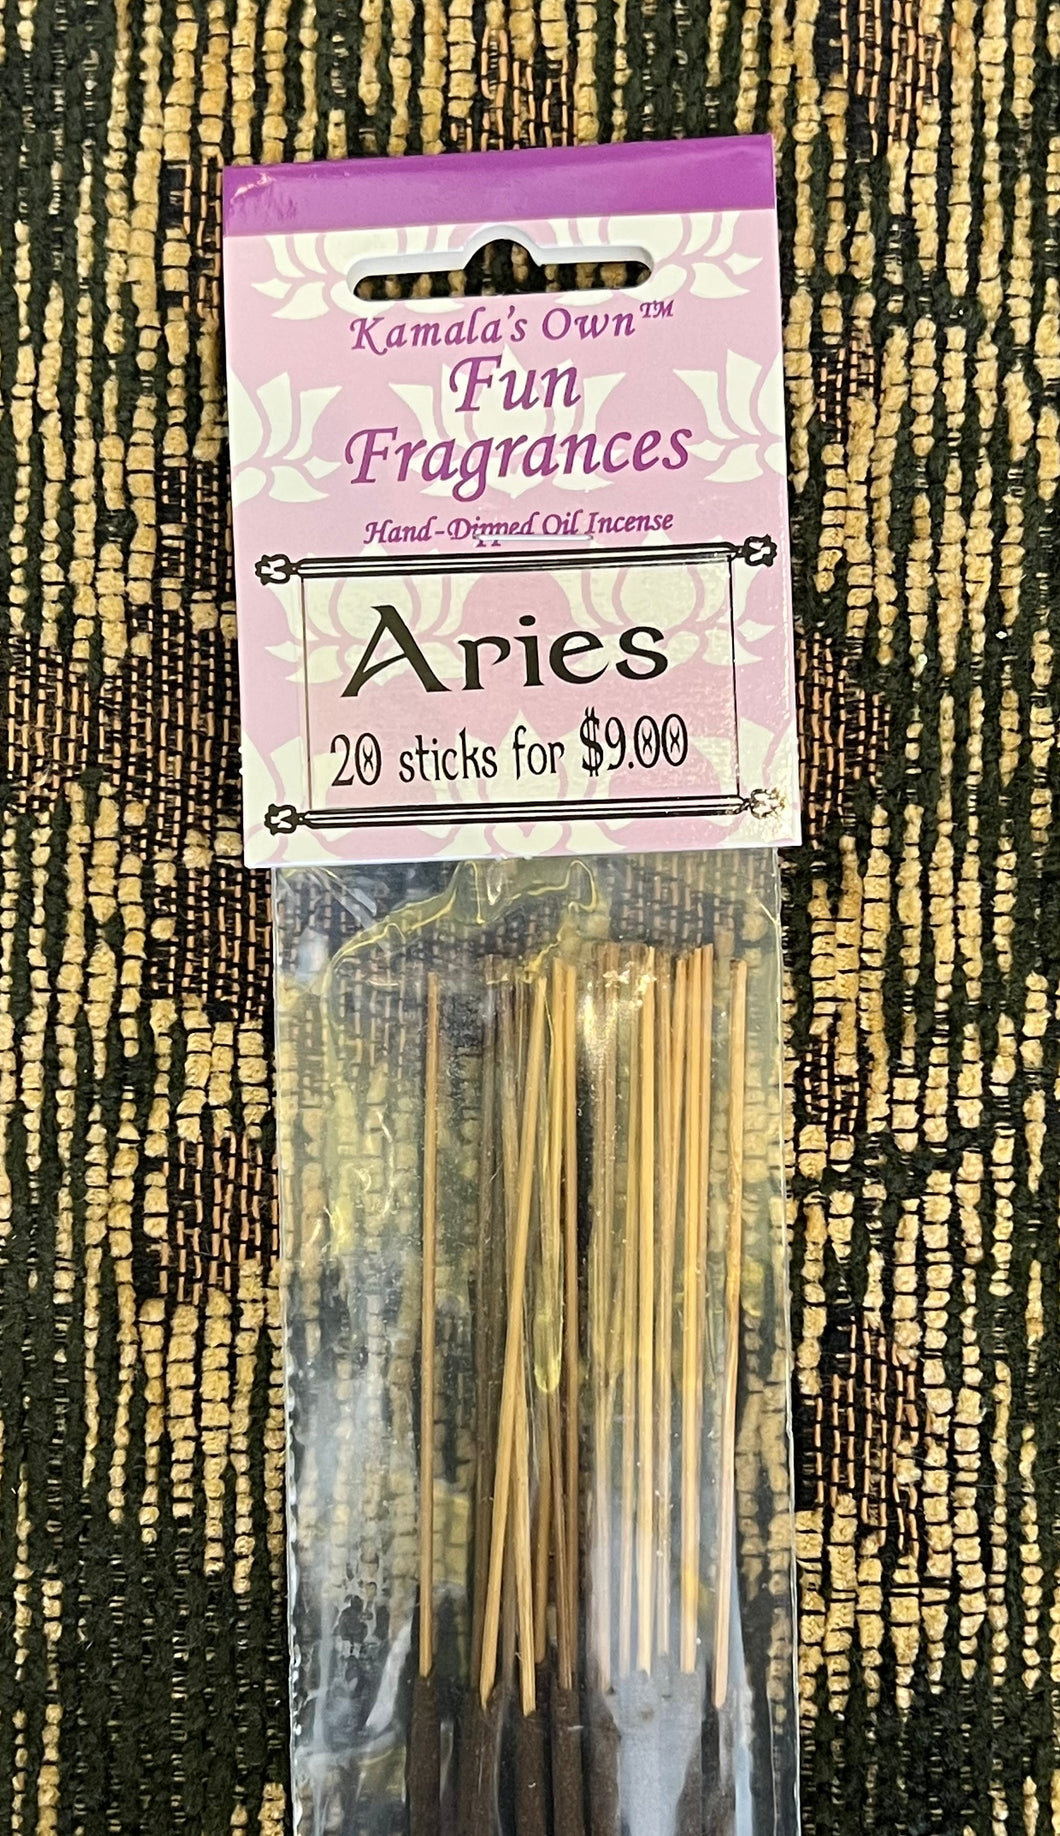 Aries sticks